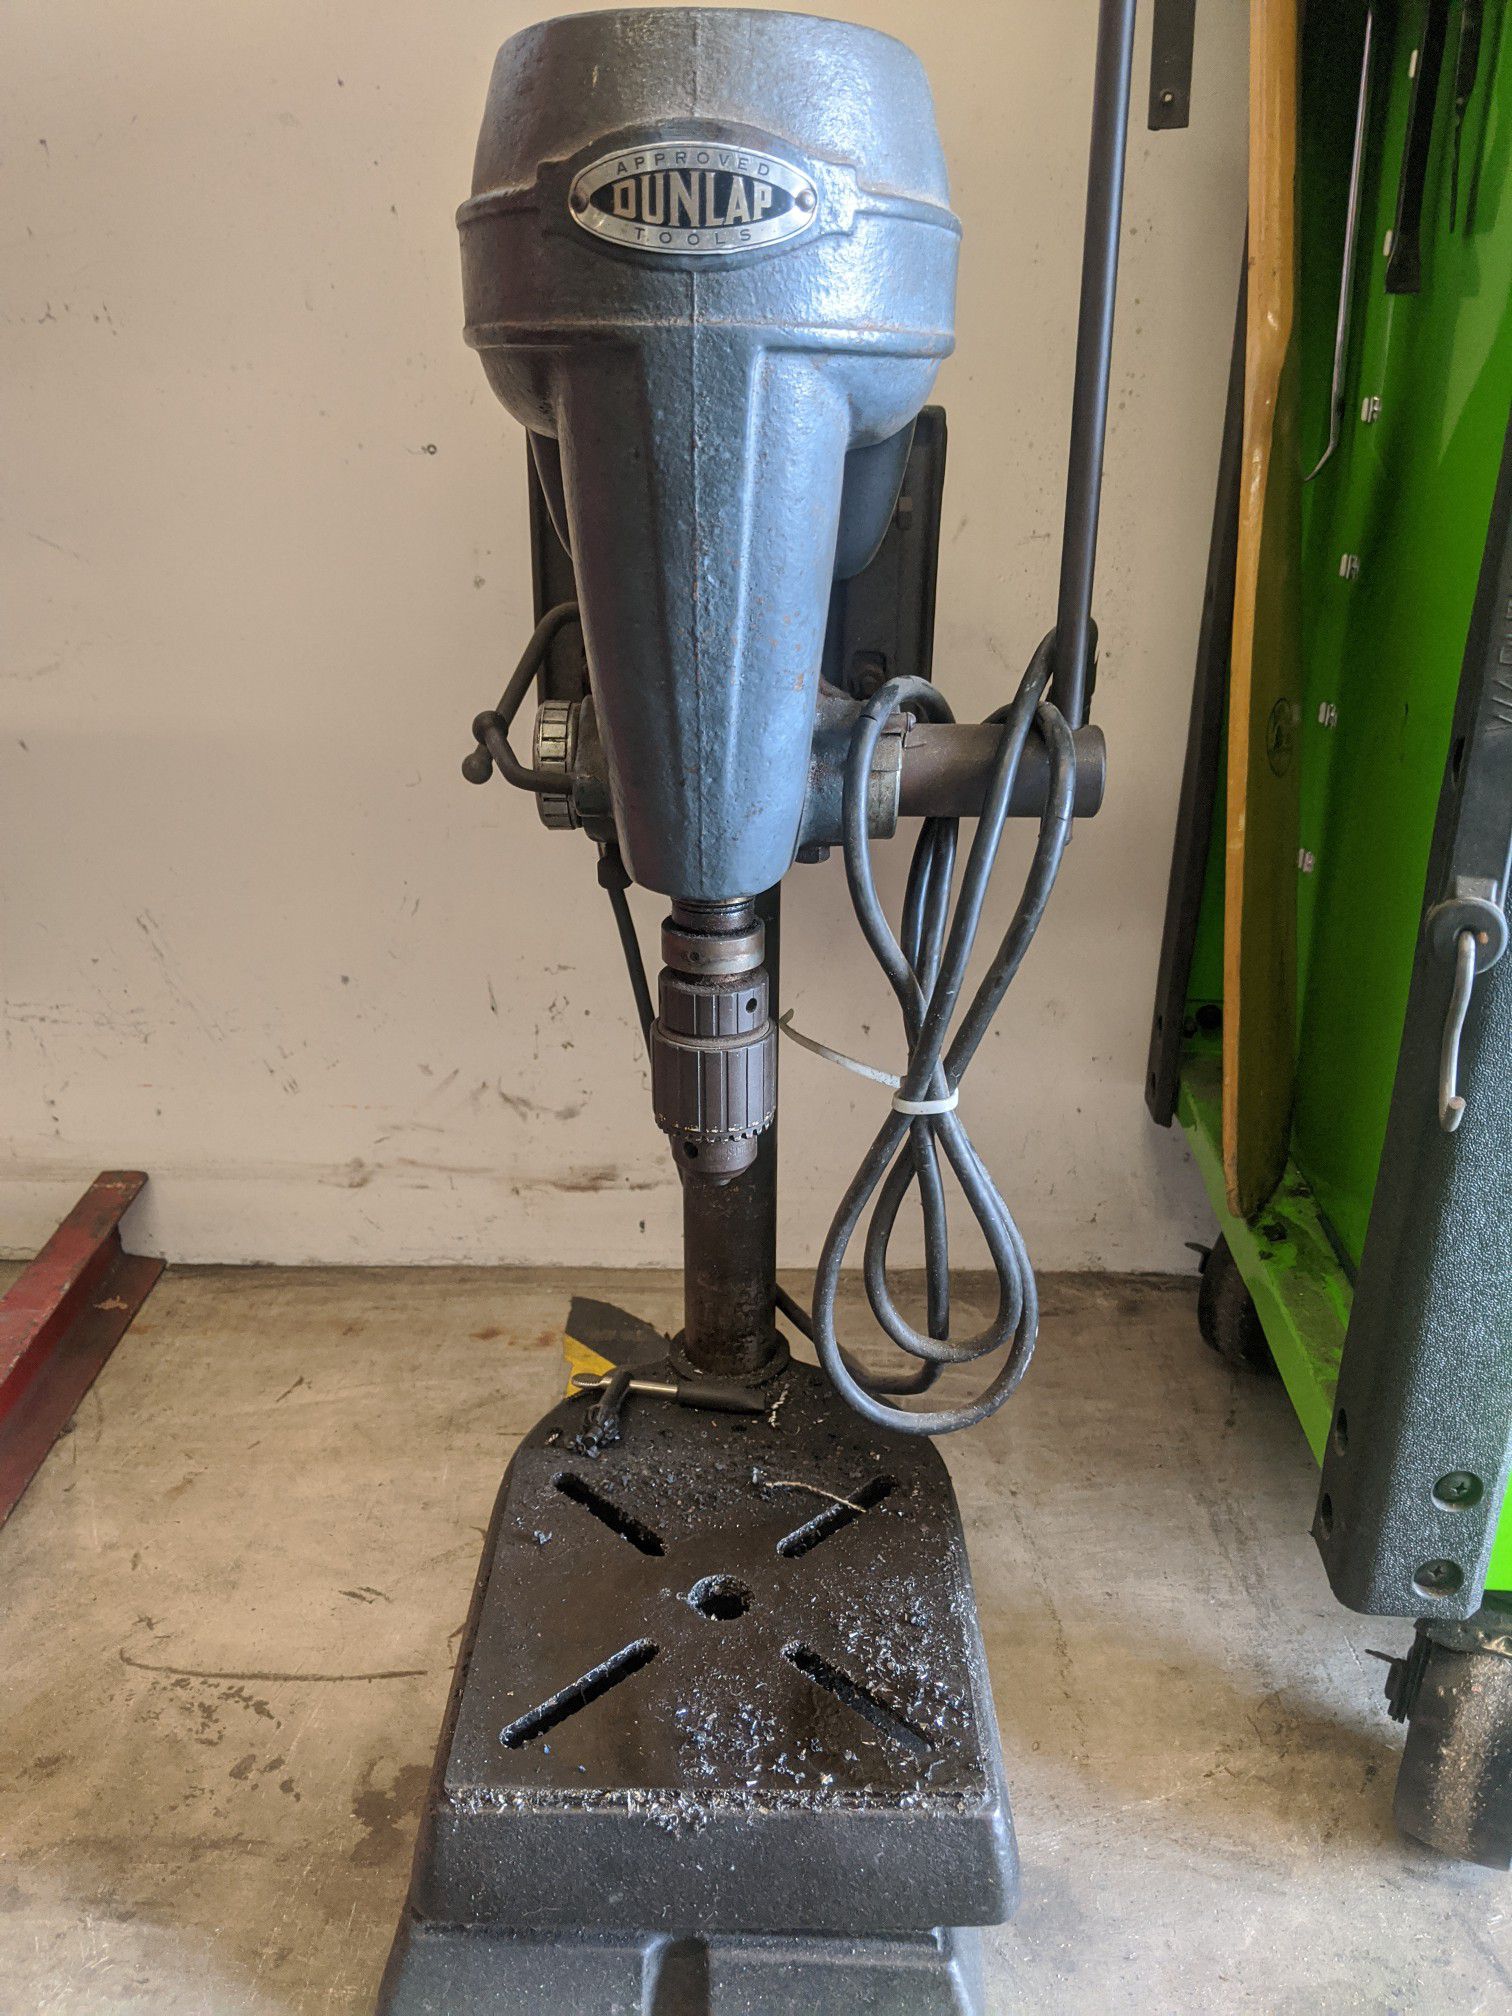 Dunlap drill press